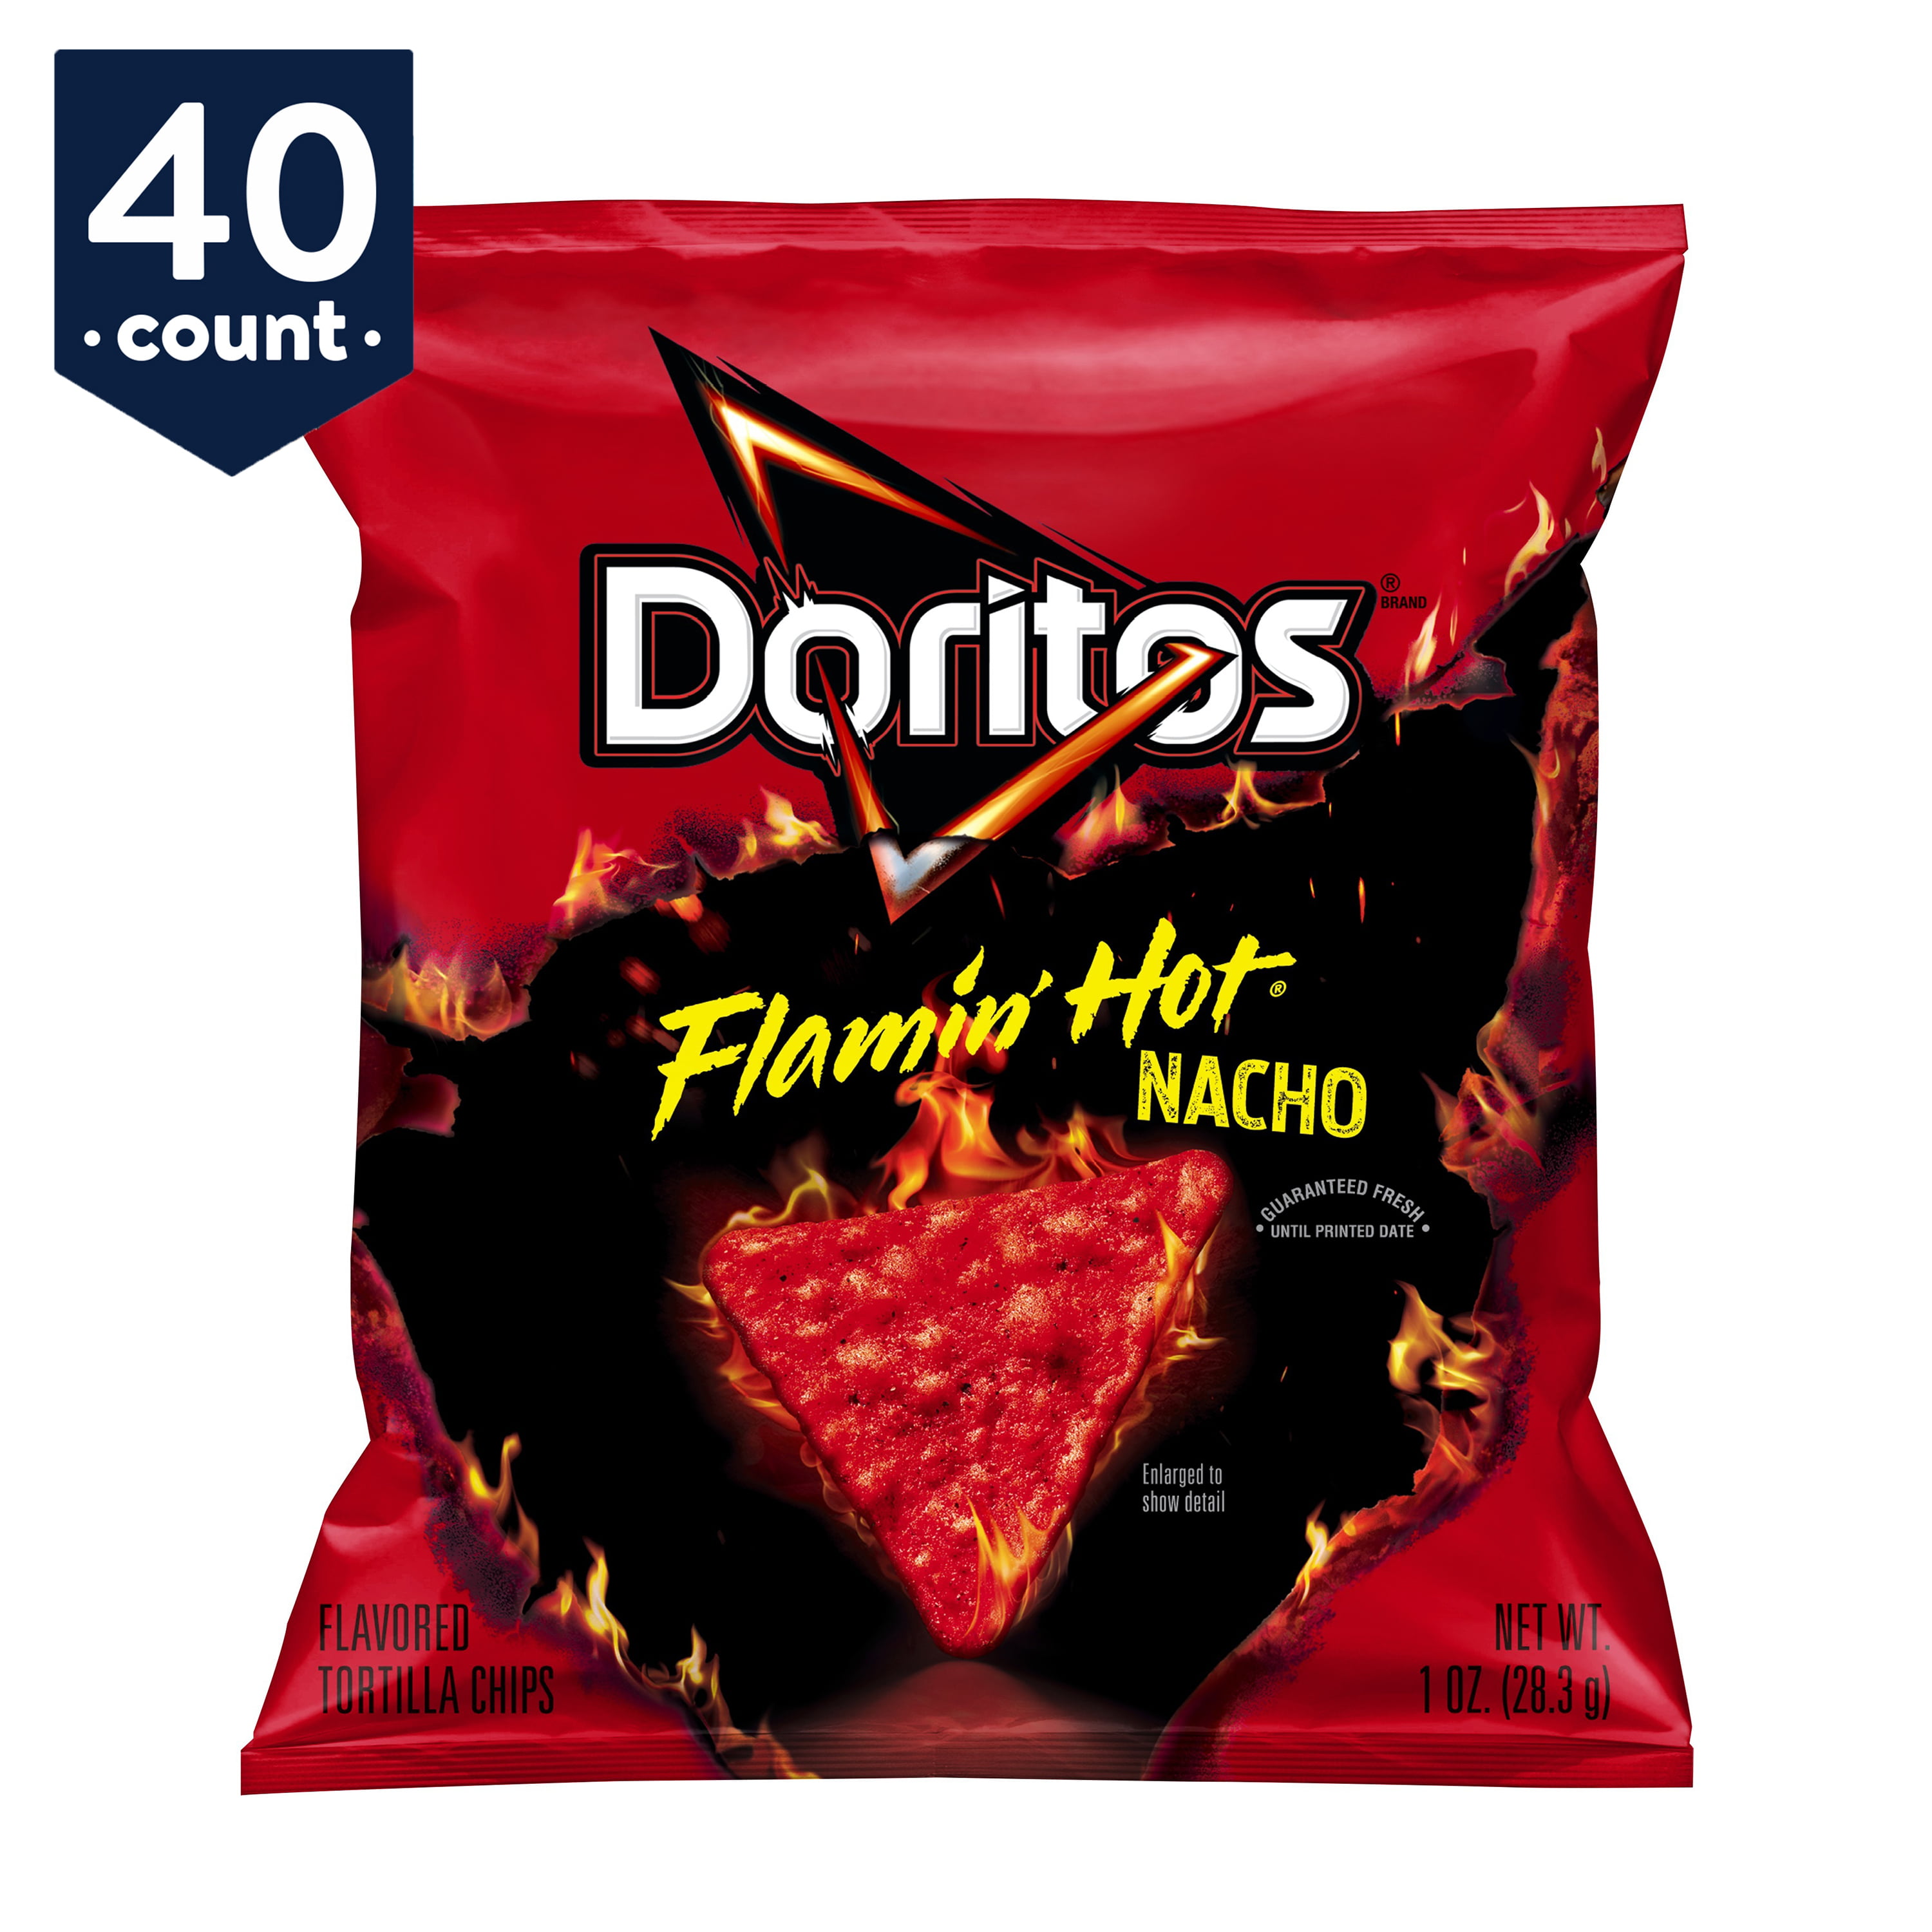 New Doritos Flamin Hot Nacho Flavored Tortilla Chips My Xxx Hot Girl 